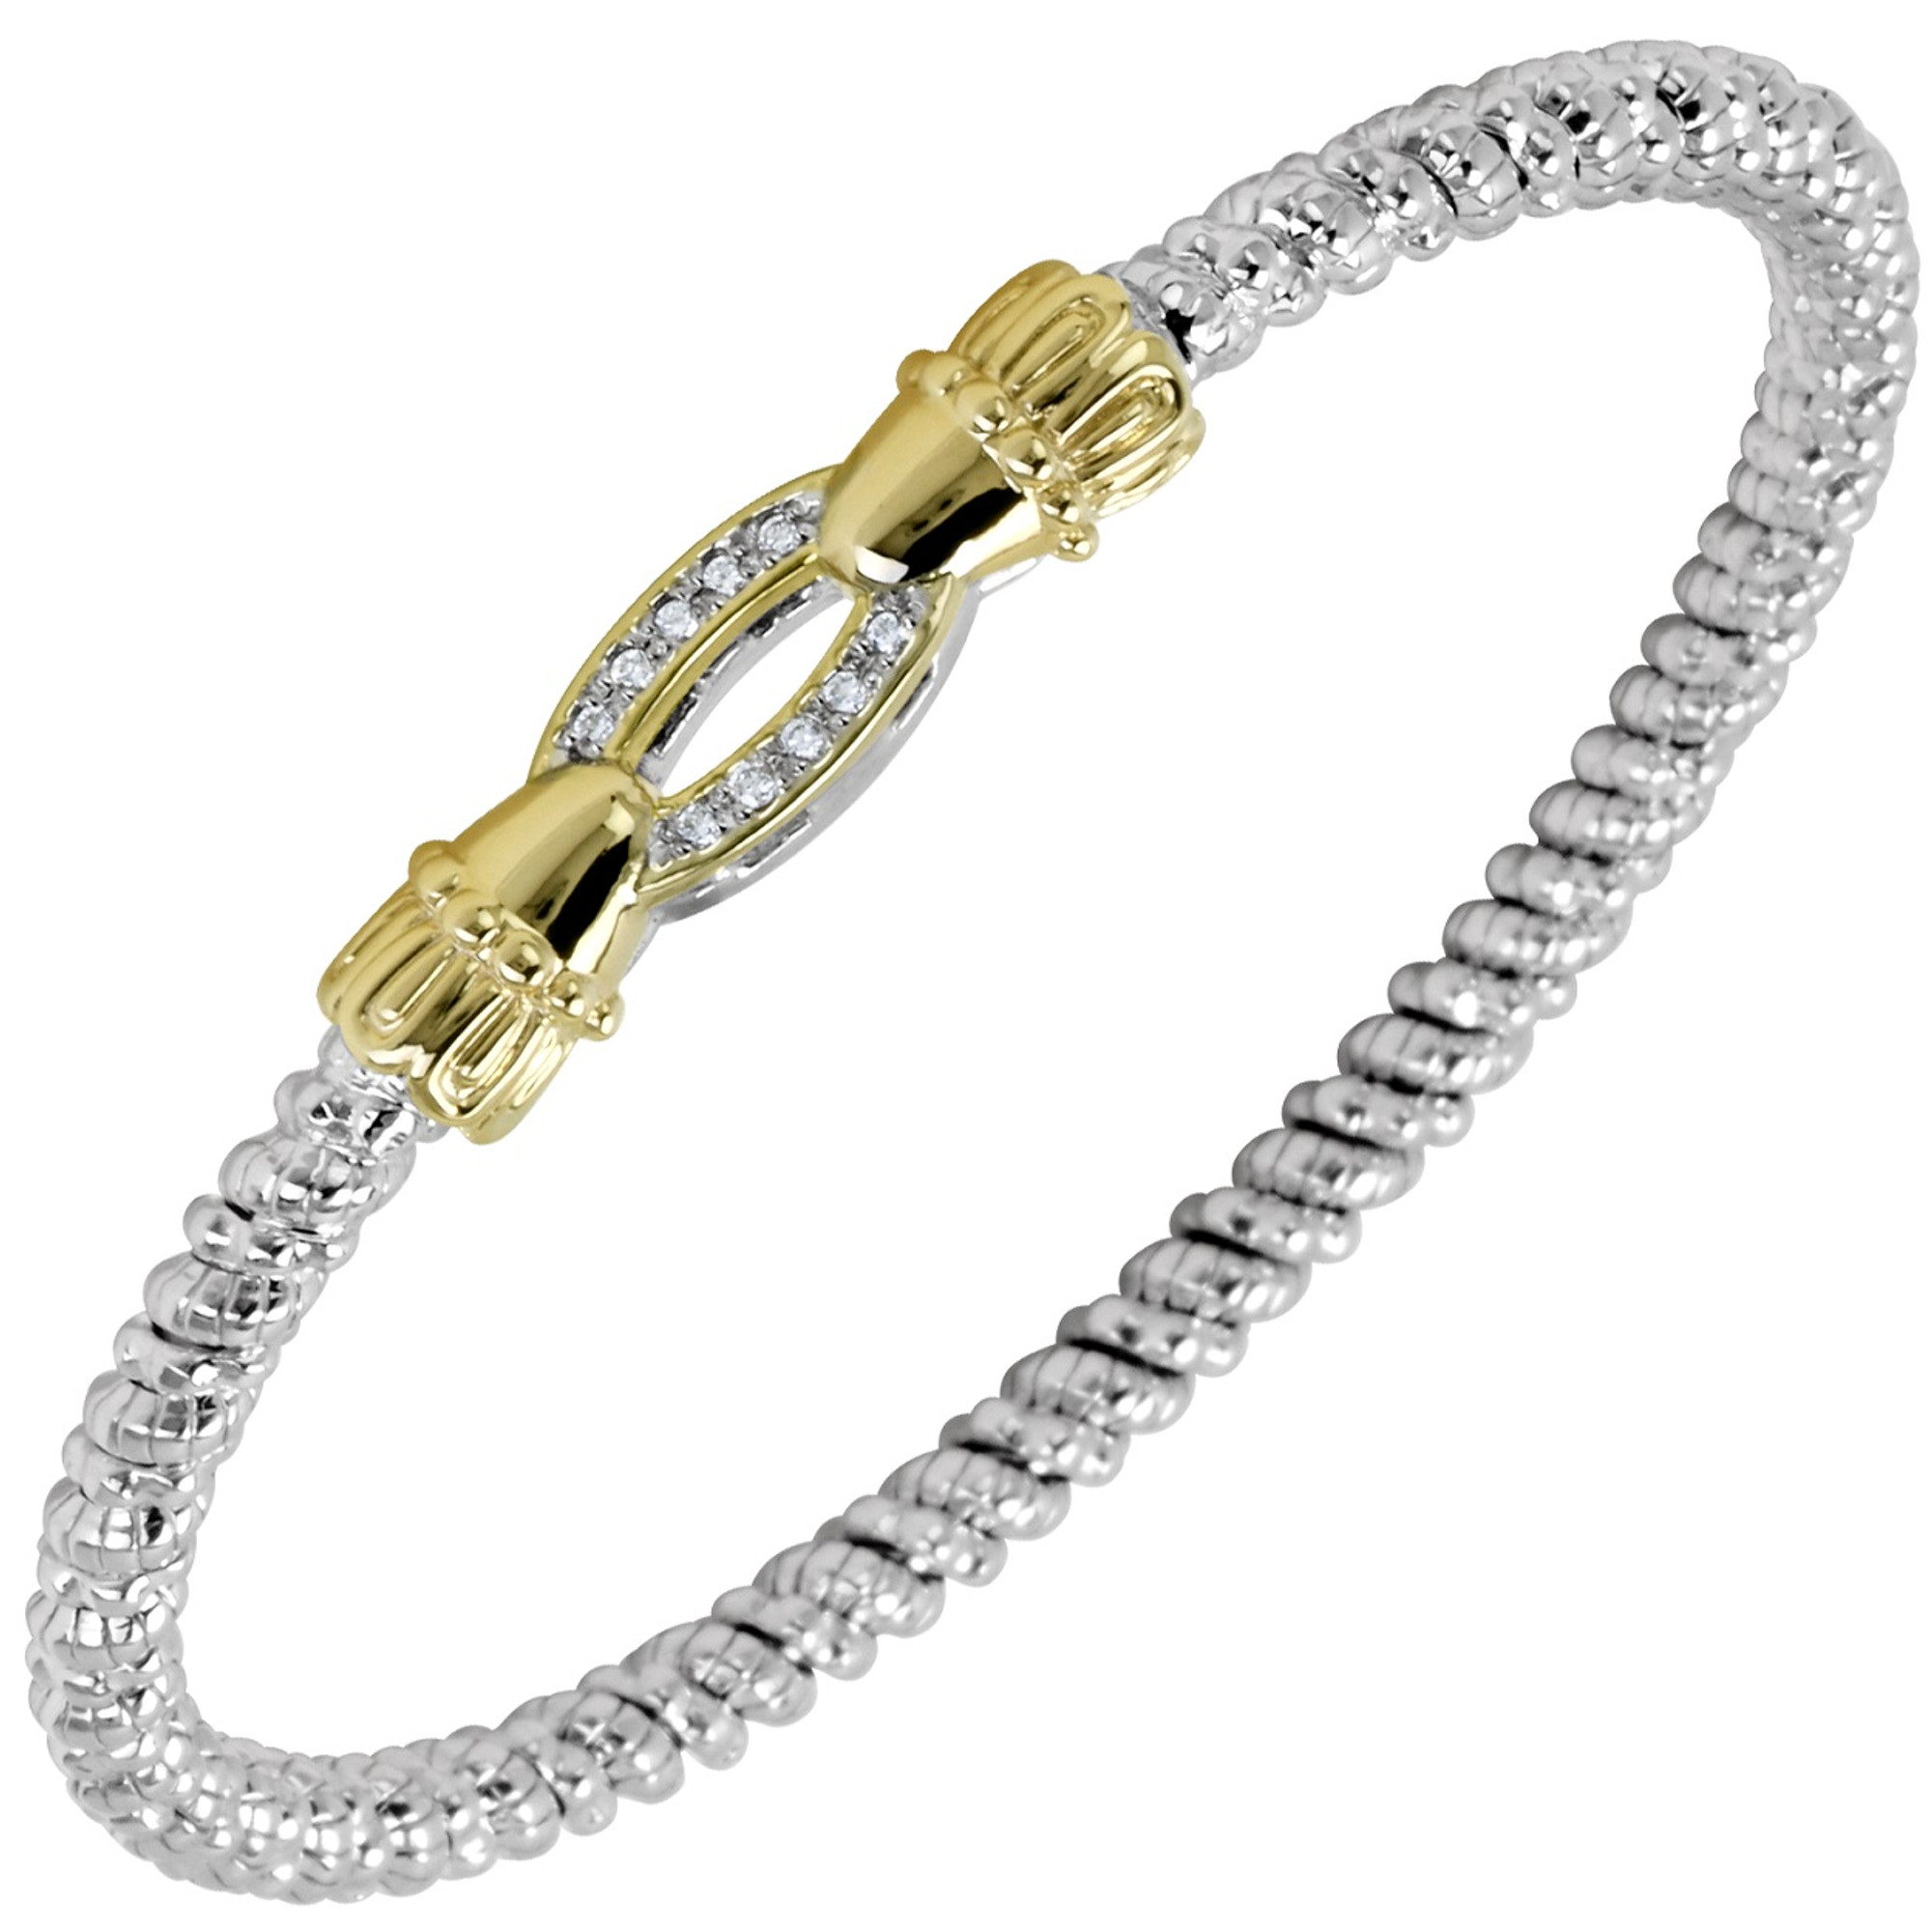 Studded Cuff Bracelet – Rothschild Diamond